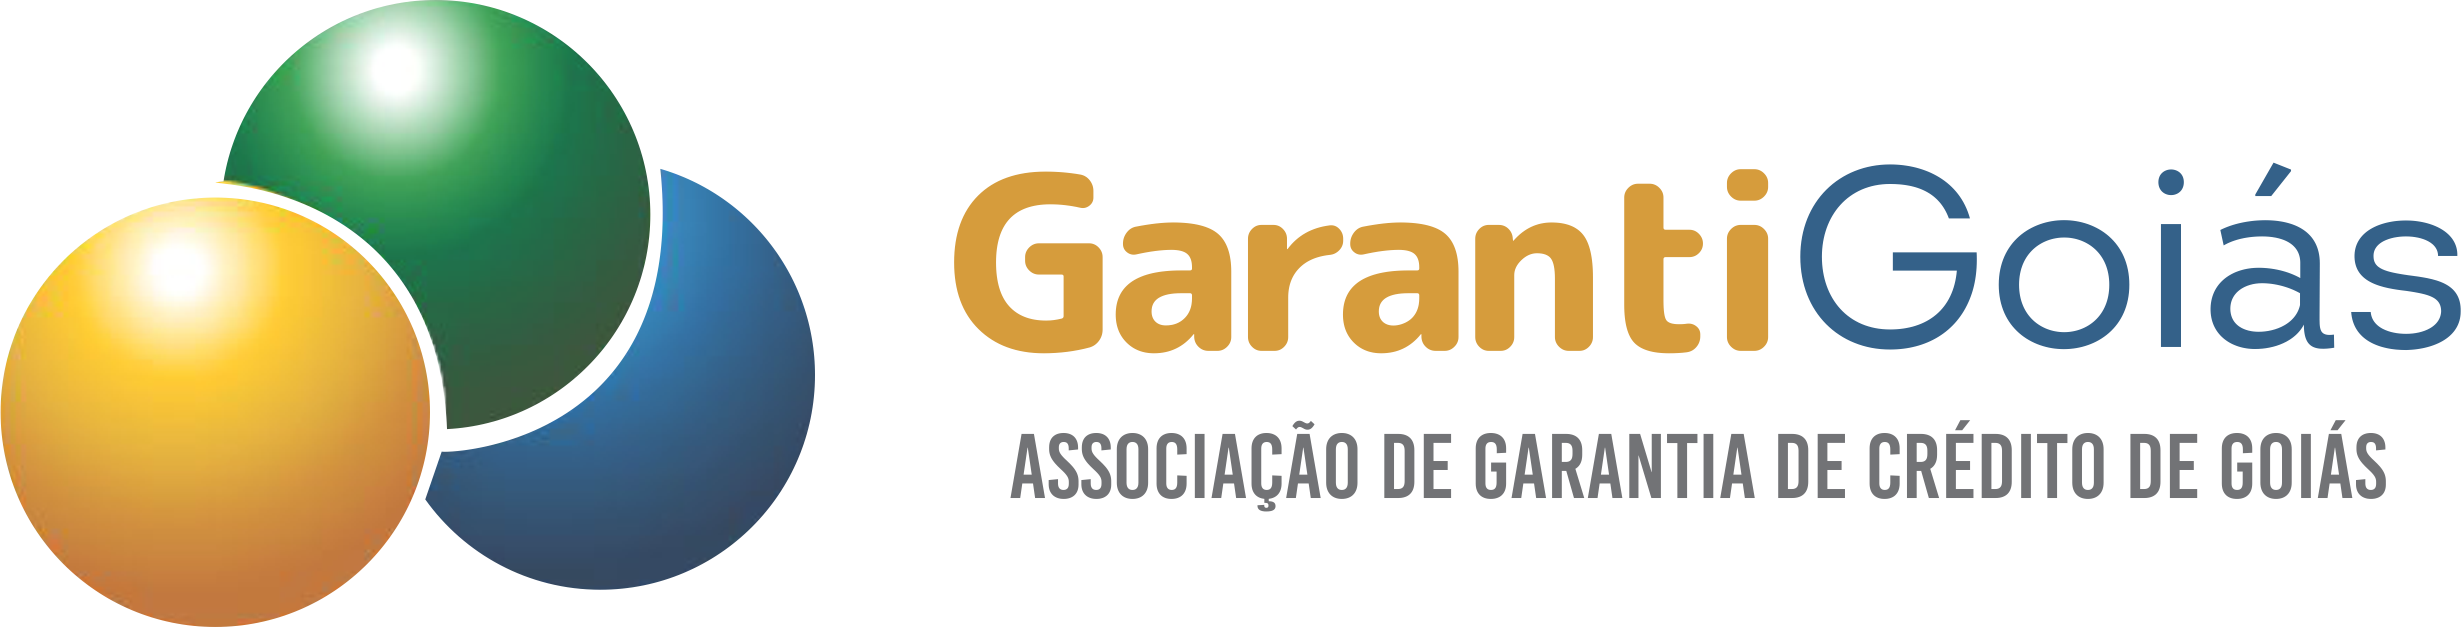 Logo Garanti Goiás Horizontal